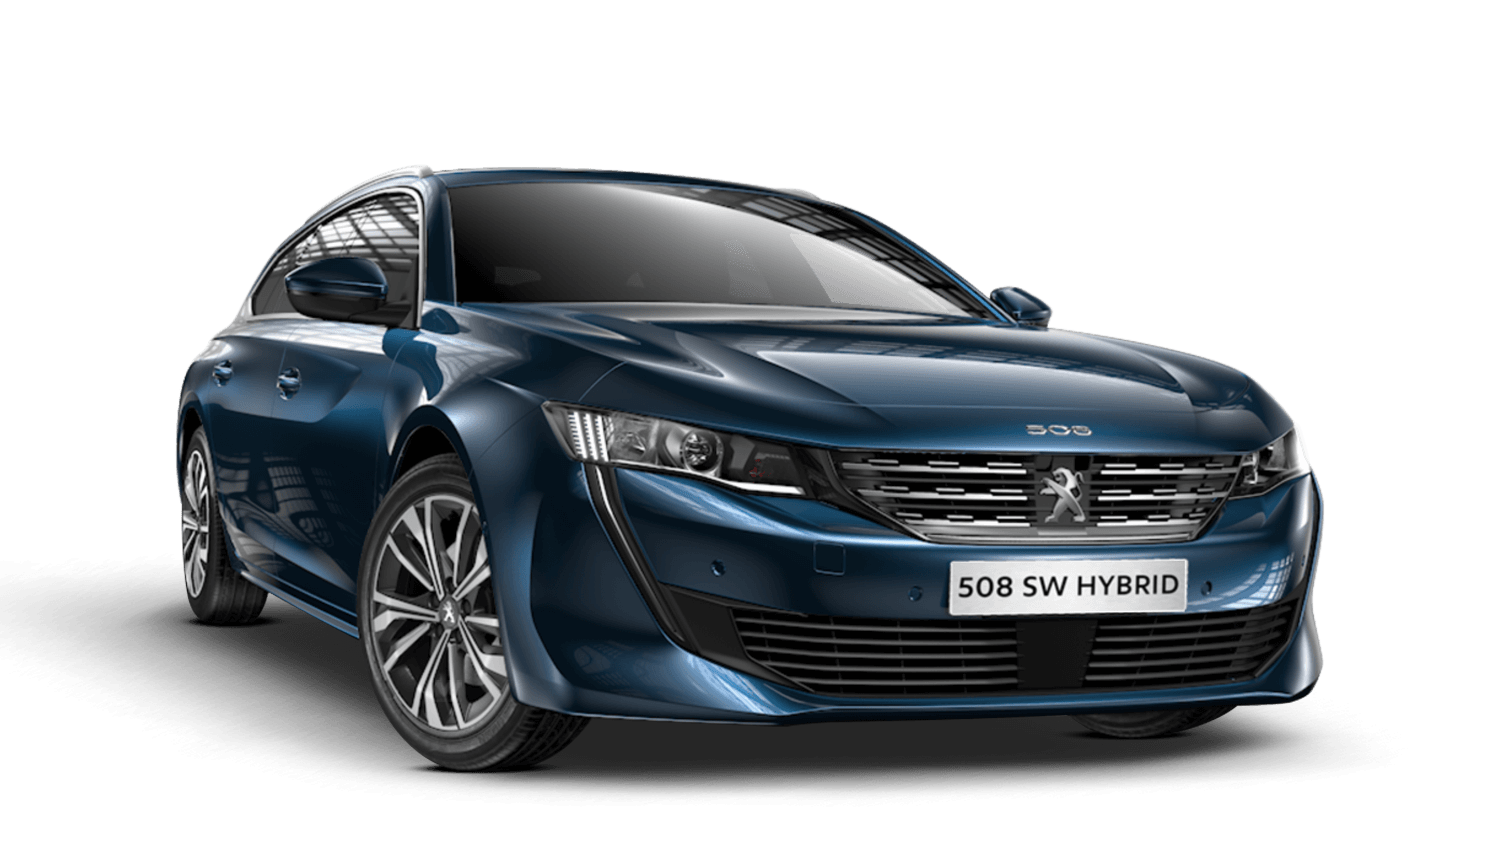 Celebes Blue Peugeot 508 Sw Hybrid